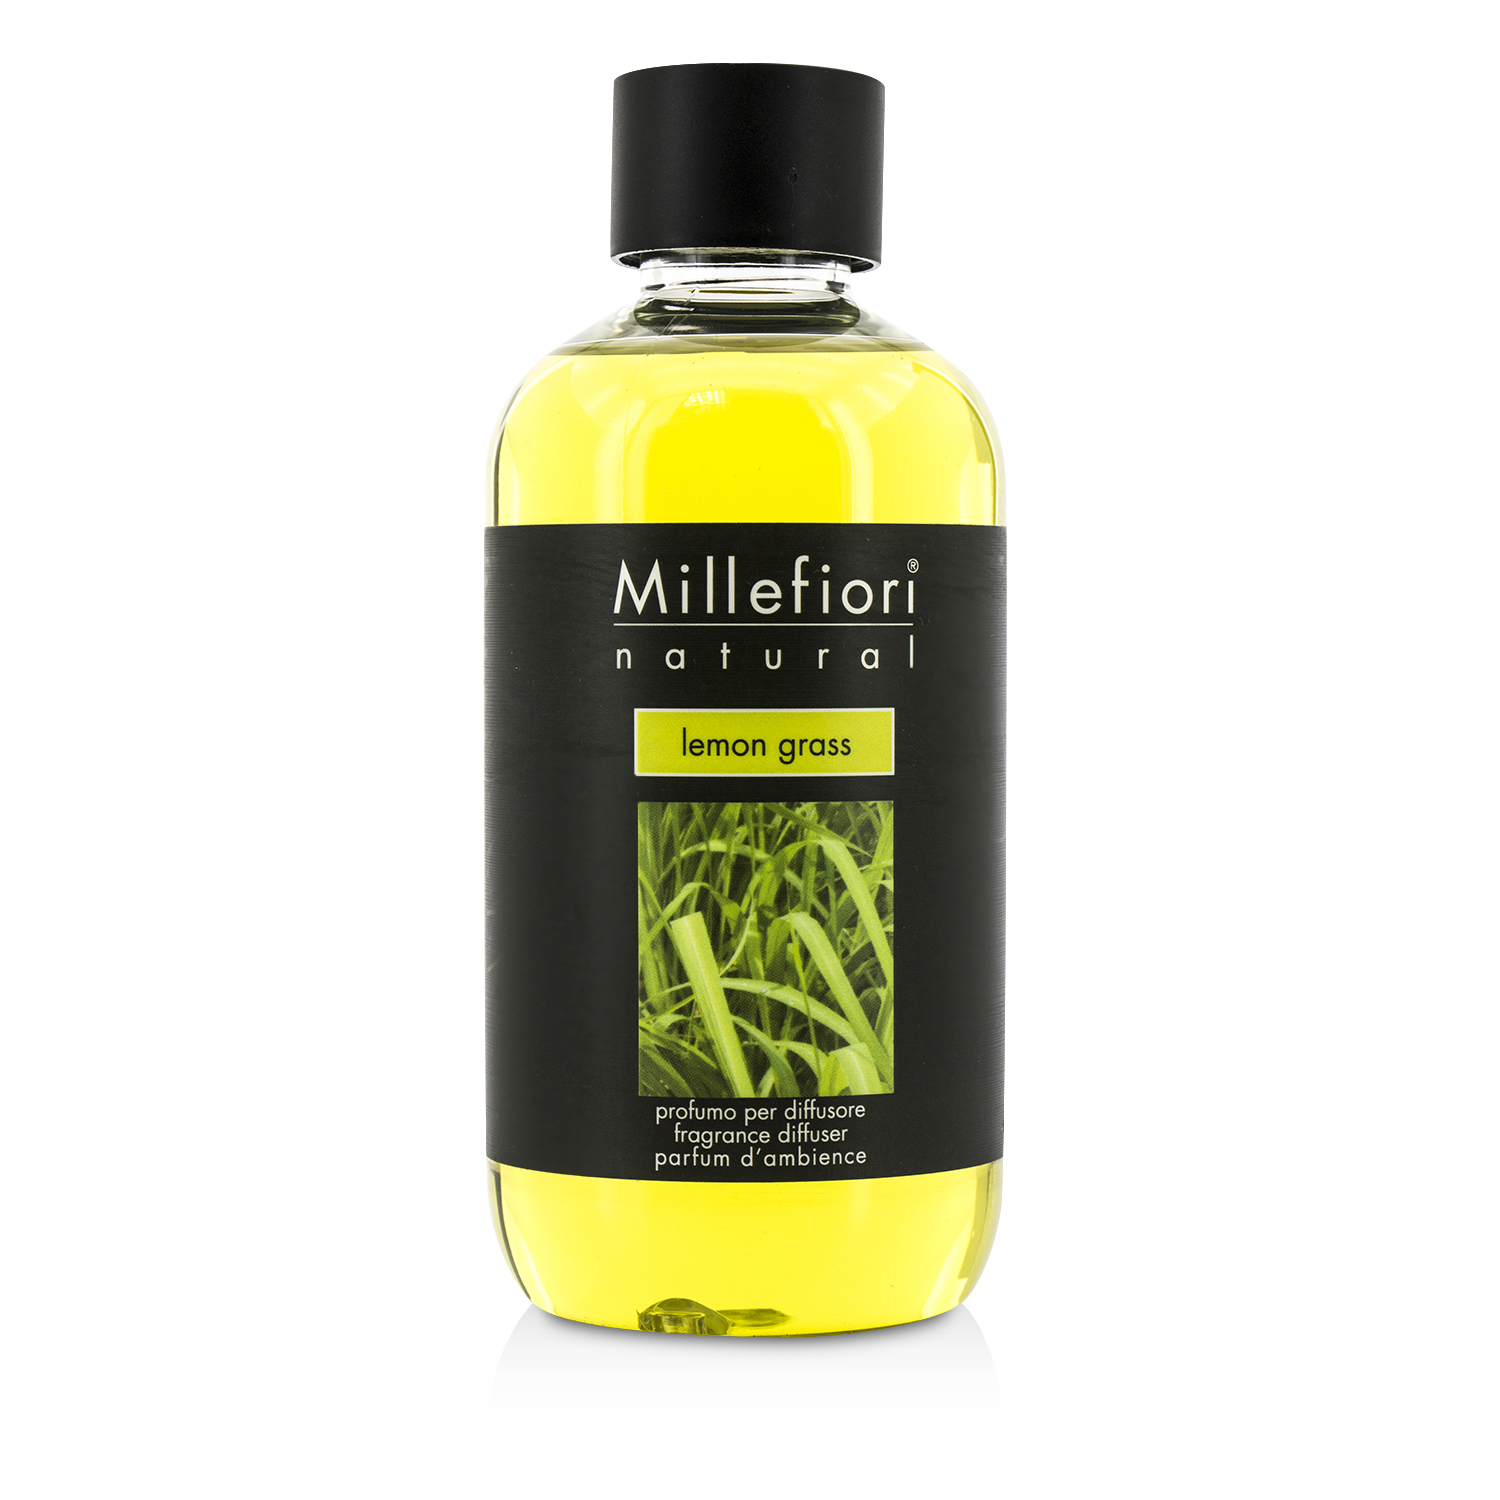 Natural Fragrance Diffuser Refill - Lemon Grass Millefiori Image